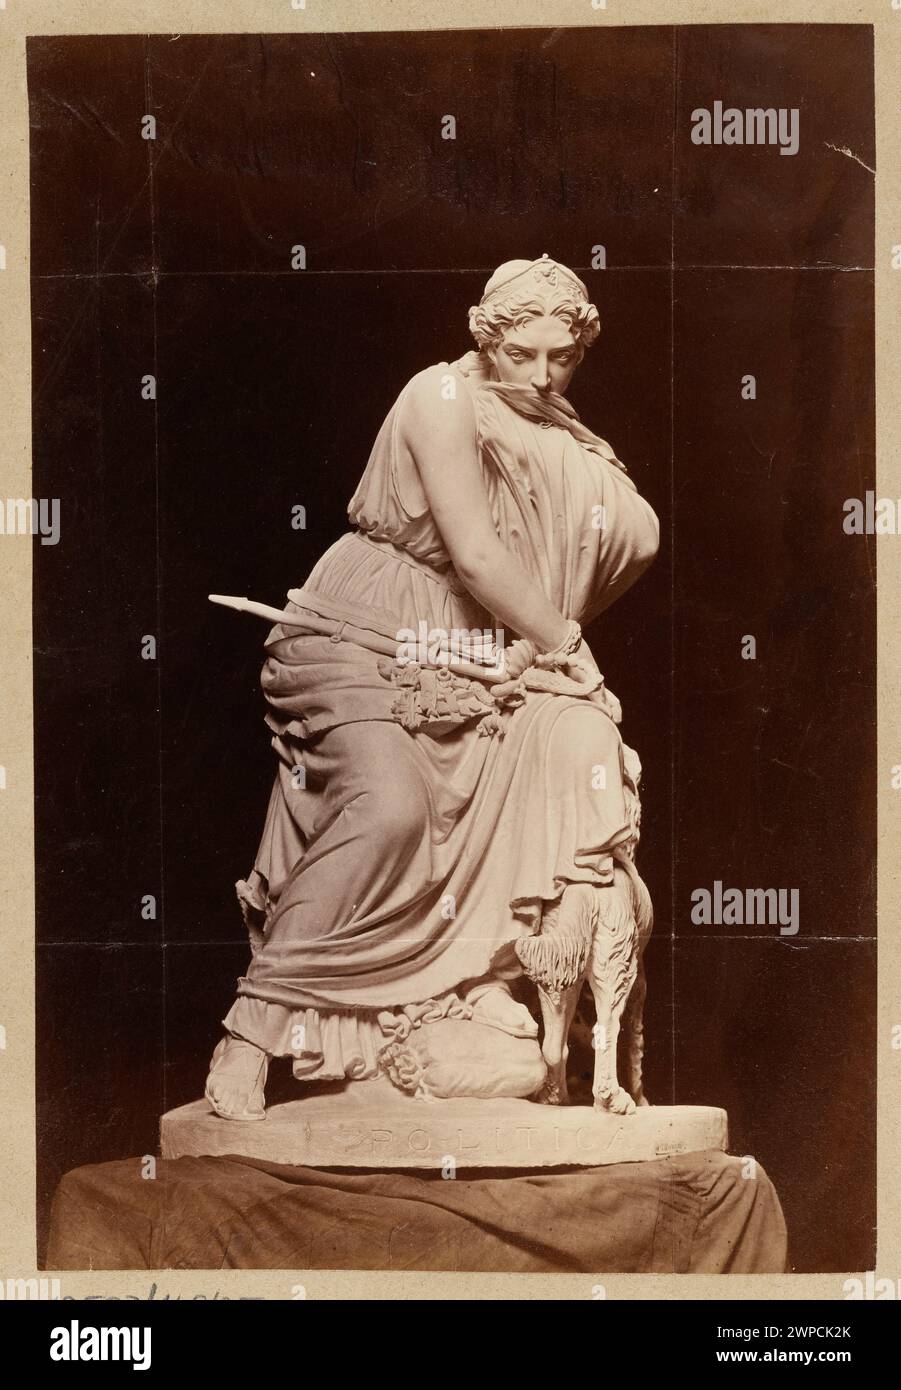 Fotografie von Wiktor Brodzki 'Polityka'; Suscipj, Lorenzo (1802-1885), Suscipj, Lorenzo (Rom; fotografisches Zak um 1873 (1868-00-00-1878-00-00); Stockfoto